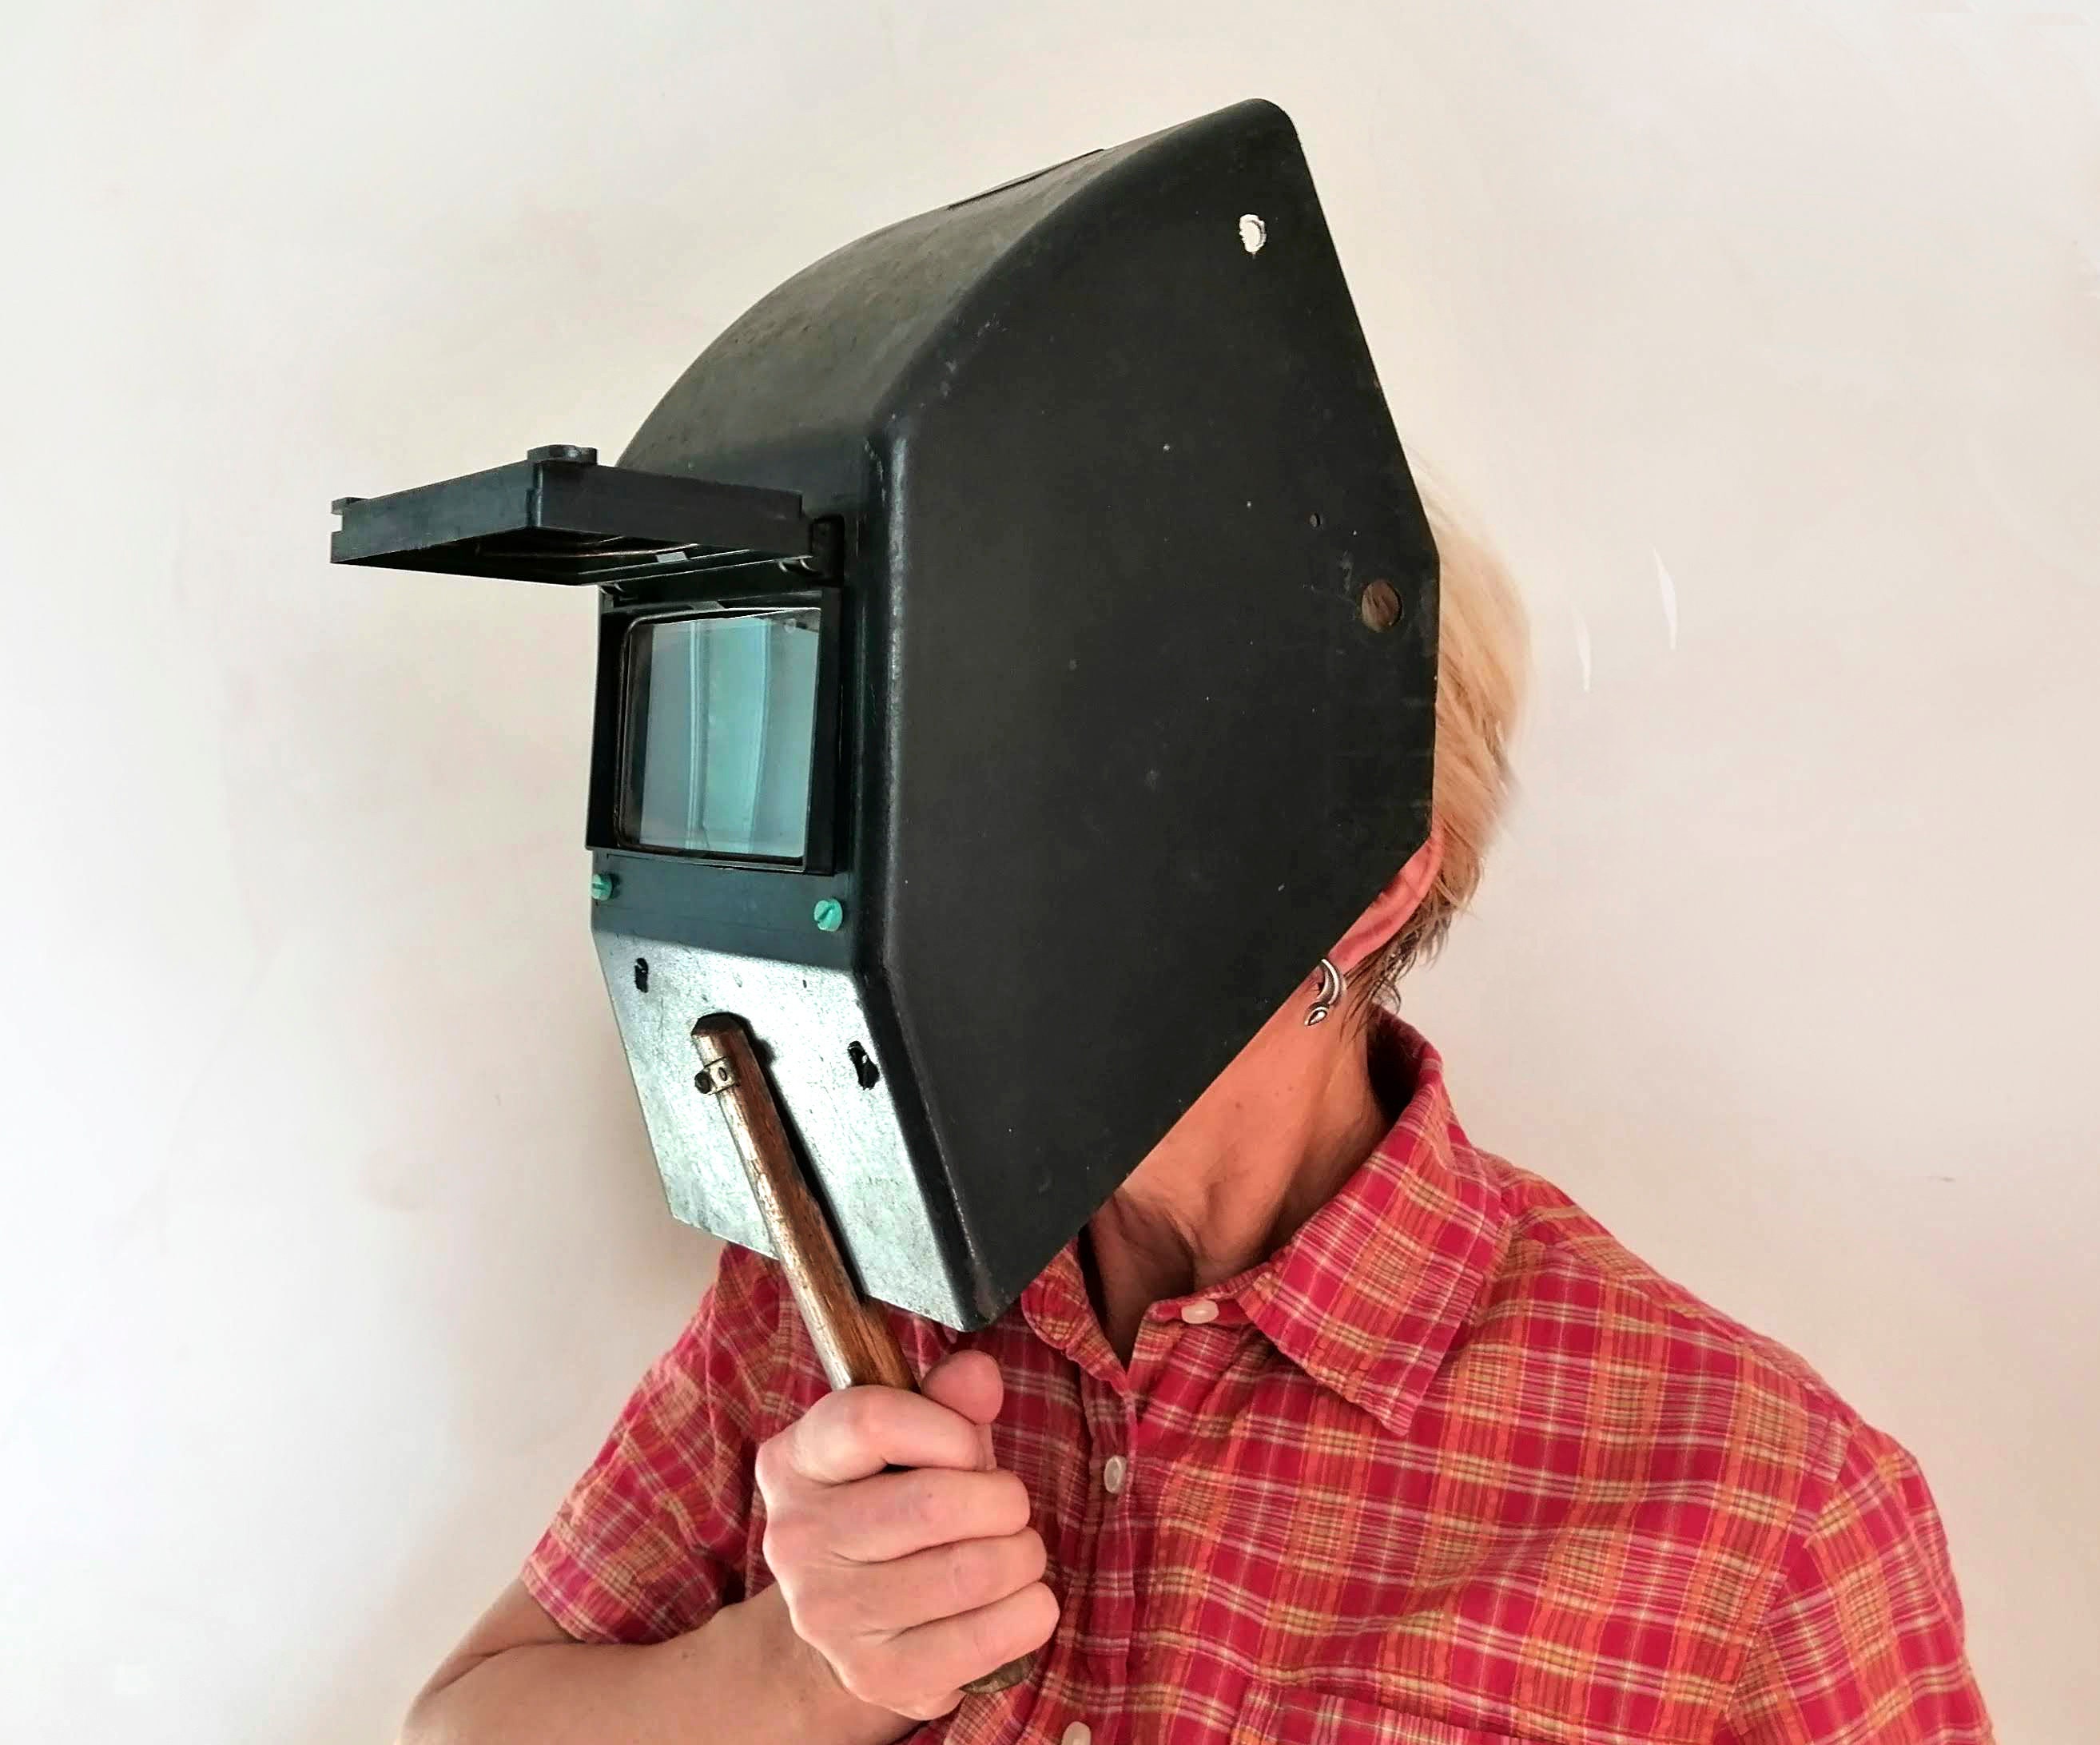 Welding Mask for Protection at 1stDibs  louis vuitton welding helmet, lv  welding helmet, old leather welding mask